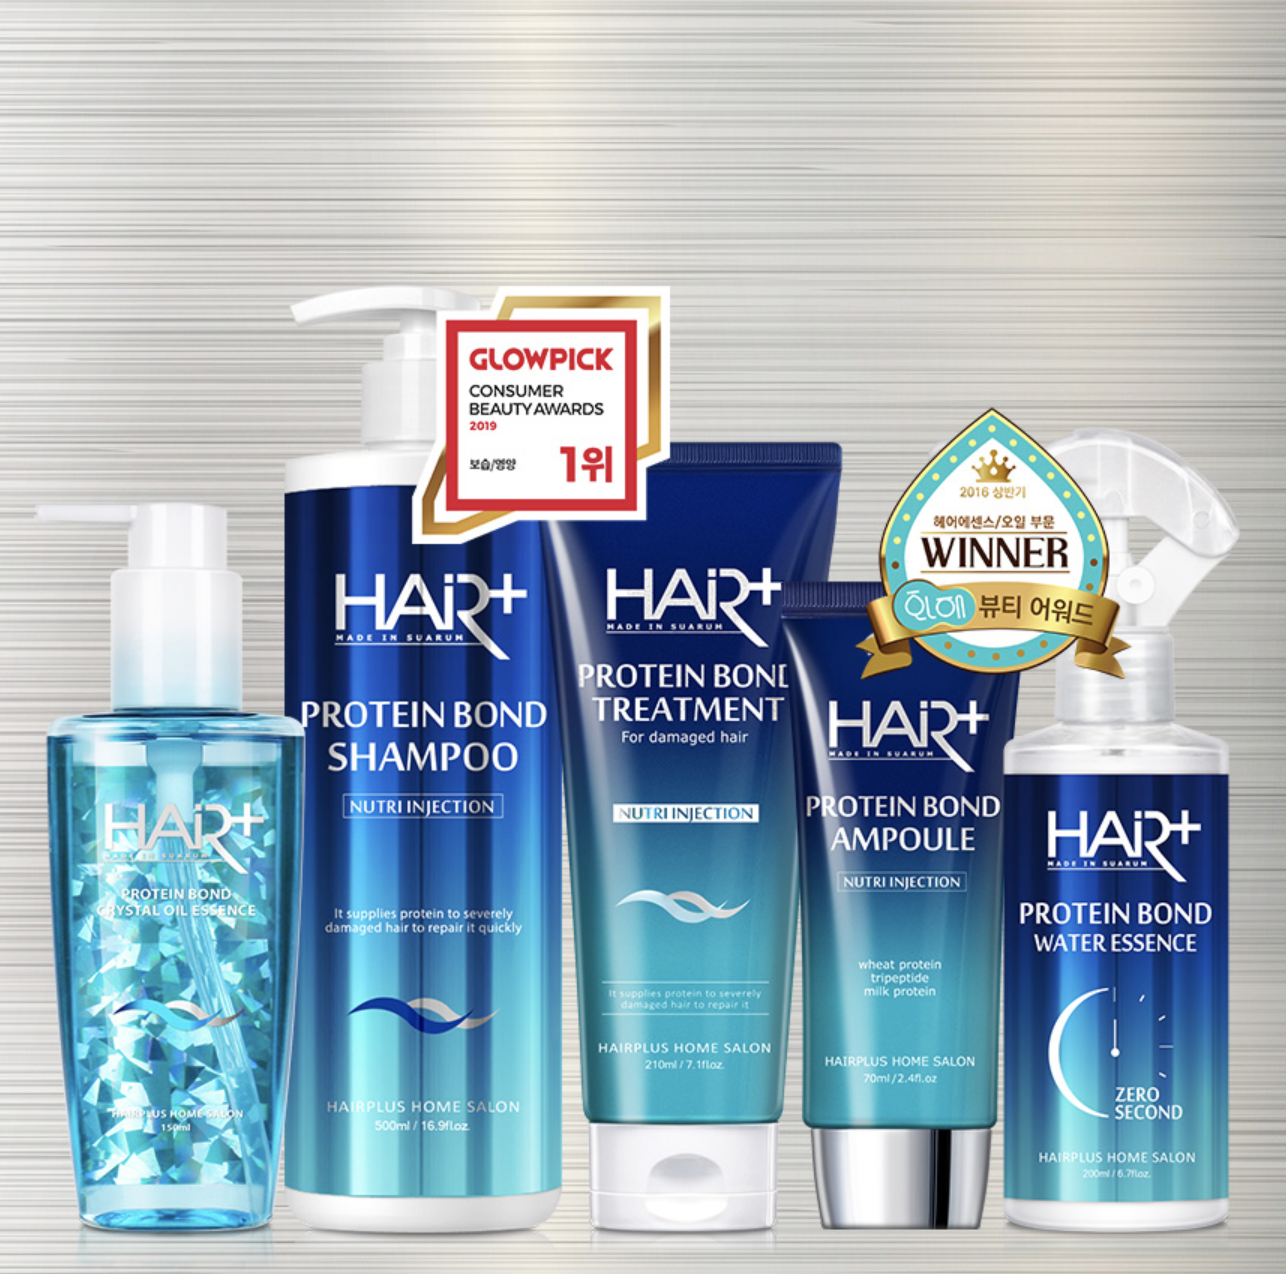 Harubeauty ru. Hair Plus Protein Bond Shampoo. Шампунь c протеином hair Plus Protein Bond Shampoo(1000 мл). Hair Plus.